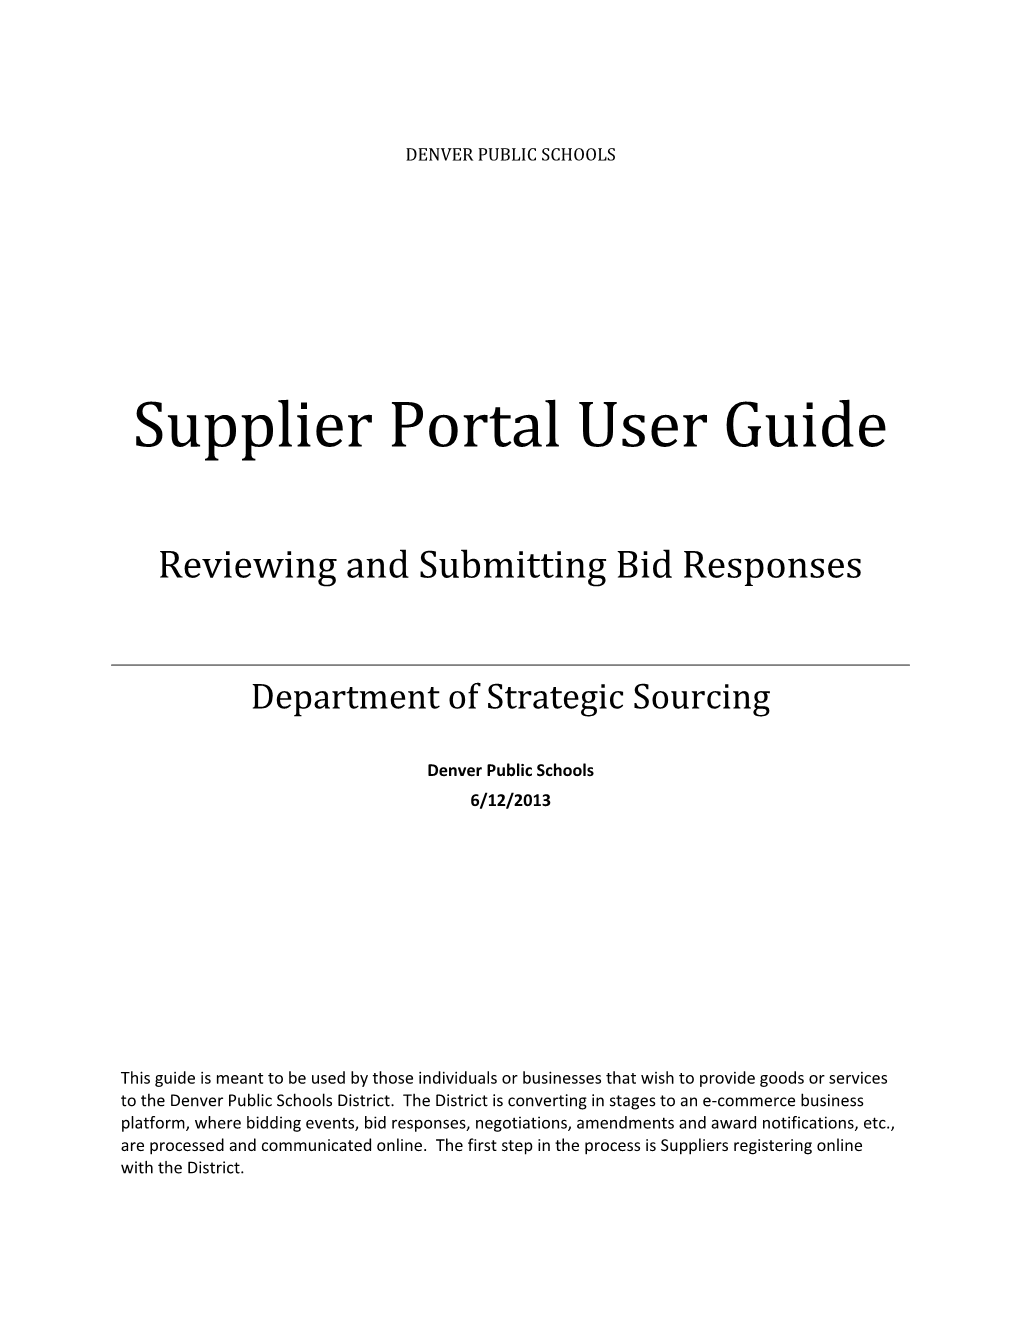 Supplier Portal User Guide